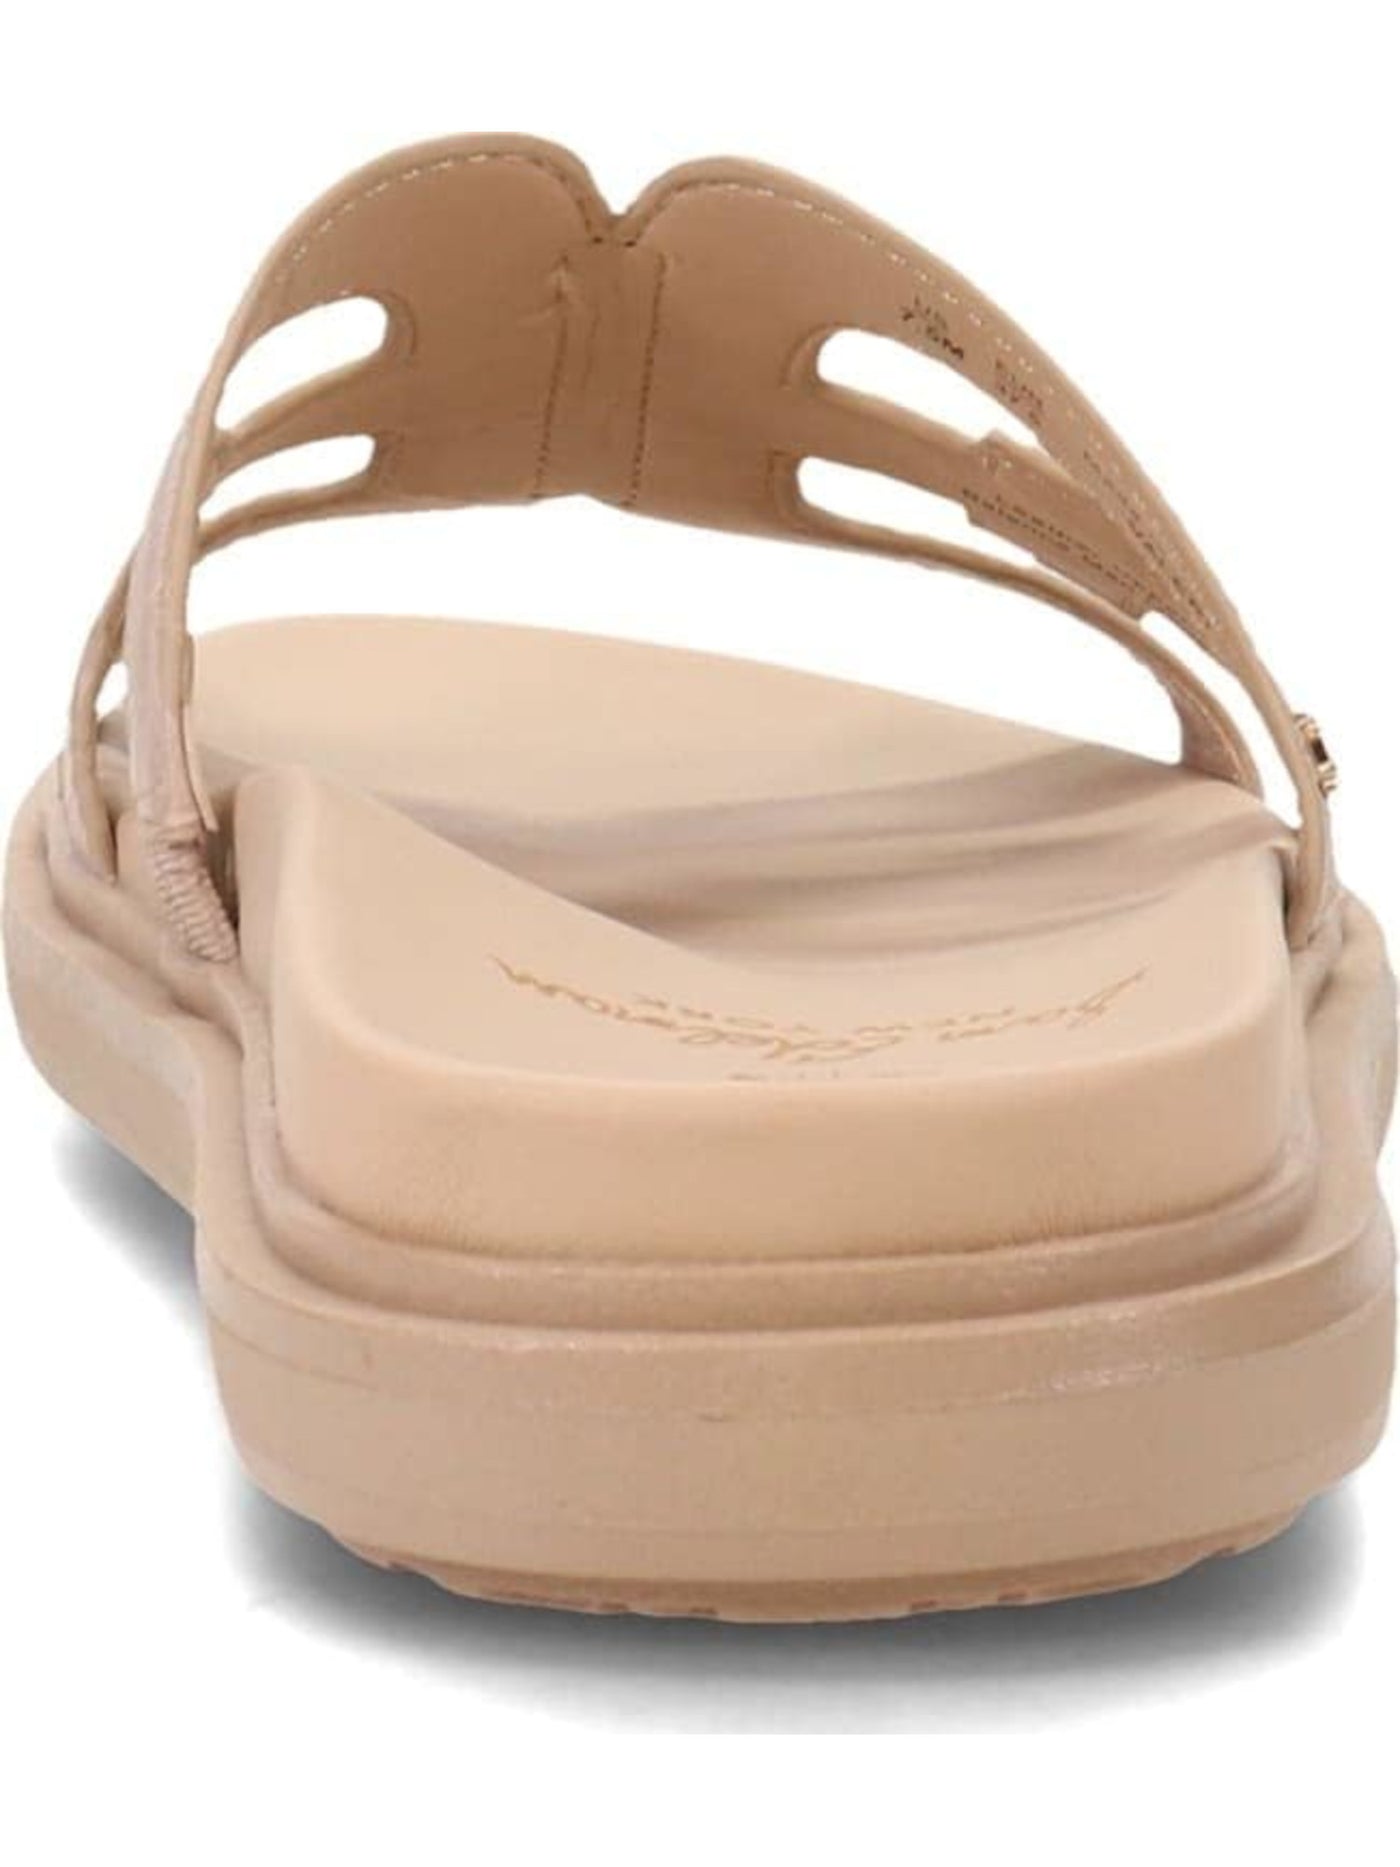 SAM EDELMAN NEW YORK Womens Beige Logo Croc Embossed Stretch Straps Cut Out Comfort Valeri Round Toe Wedge Slip On Leather Slide Sandals Shoes 7.5 M